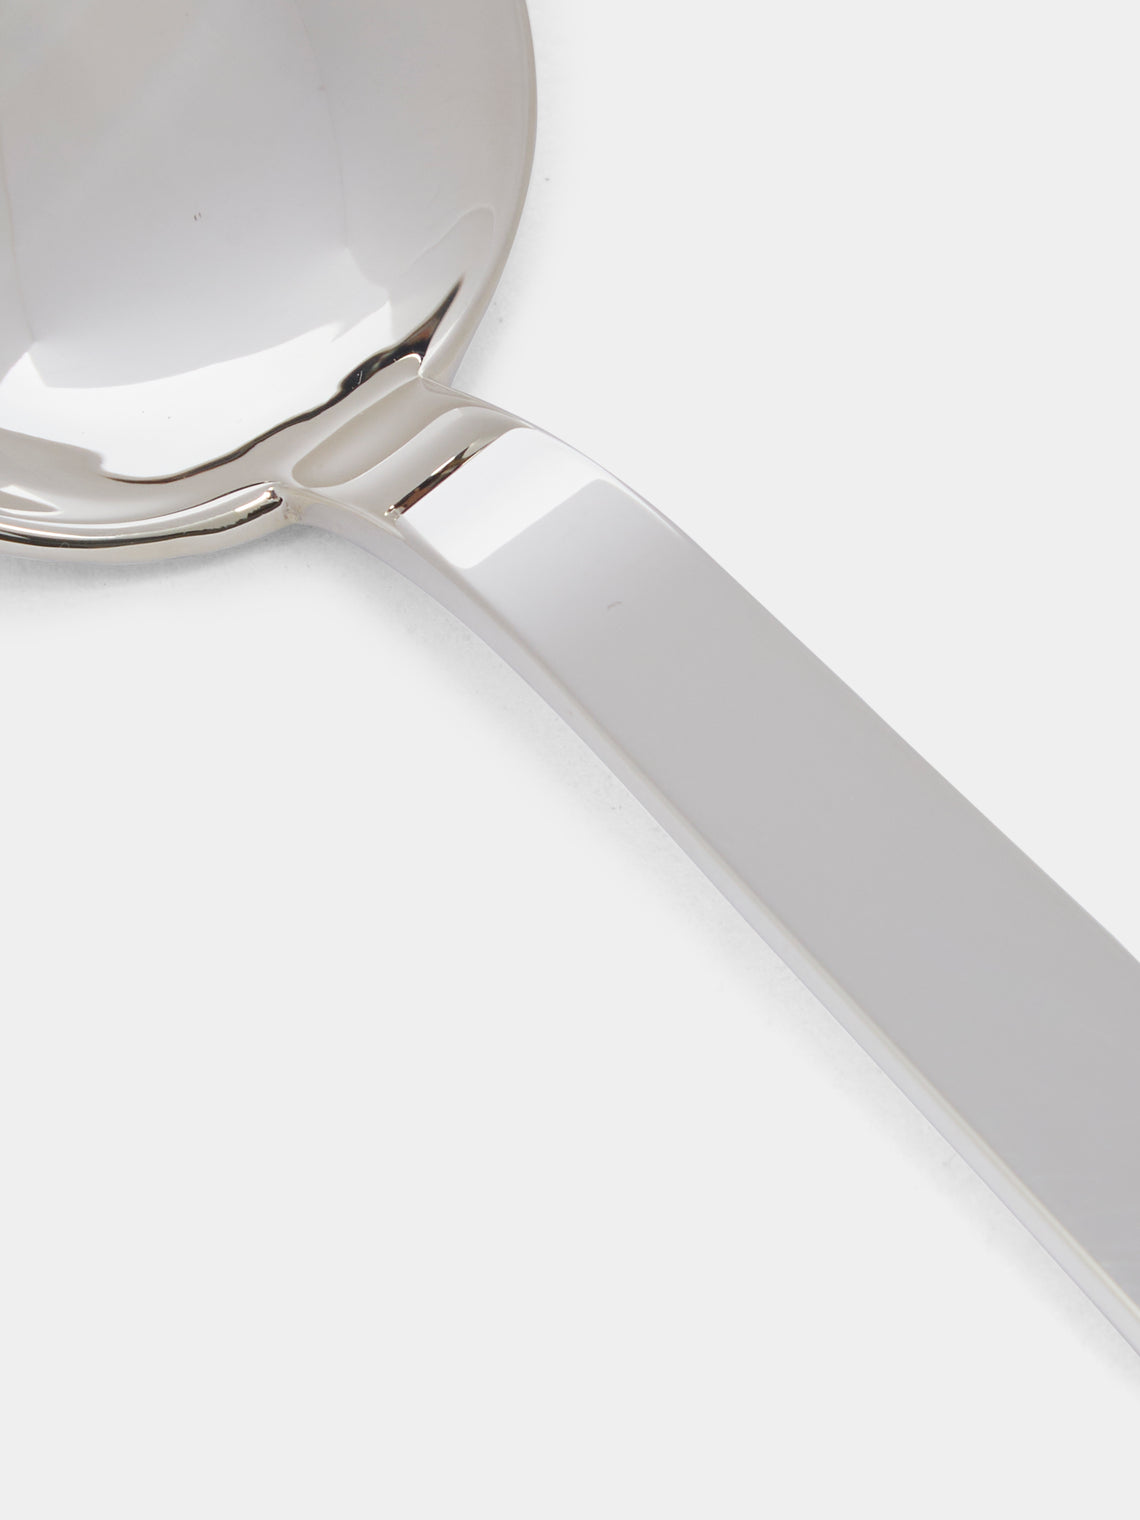 Wiener Silber Manufactur - Josef Hoffmann 135 Silver-Plated Dessert Spoon -  - ABASK